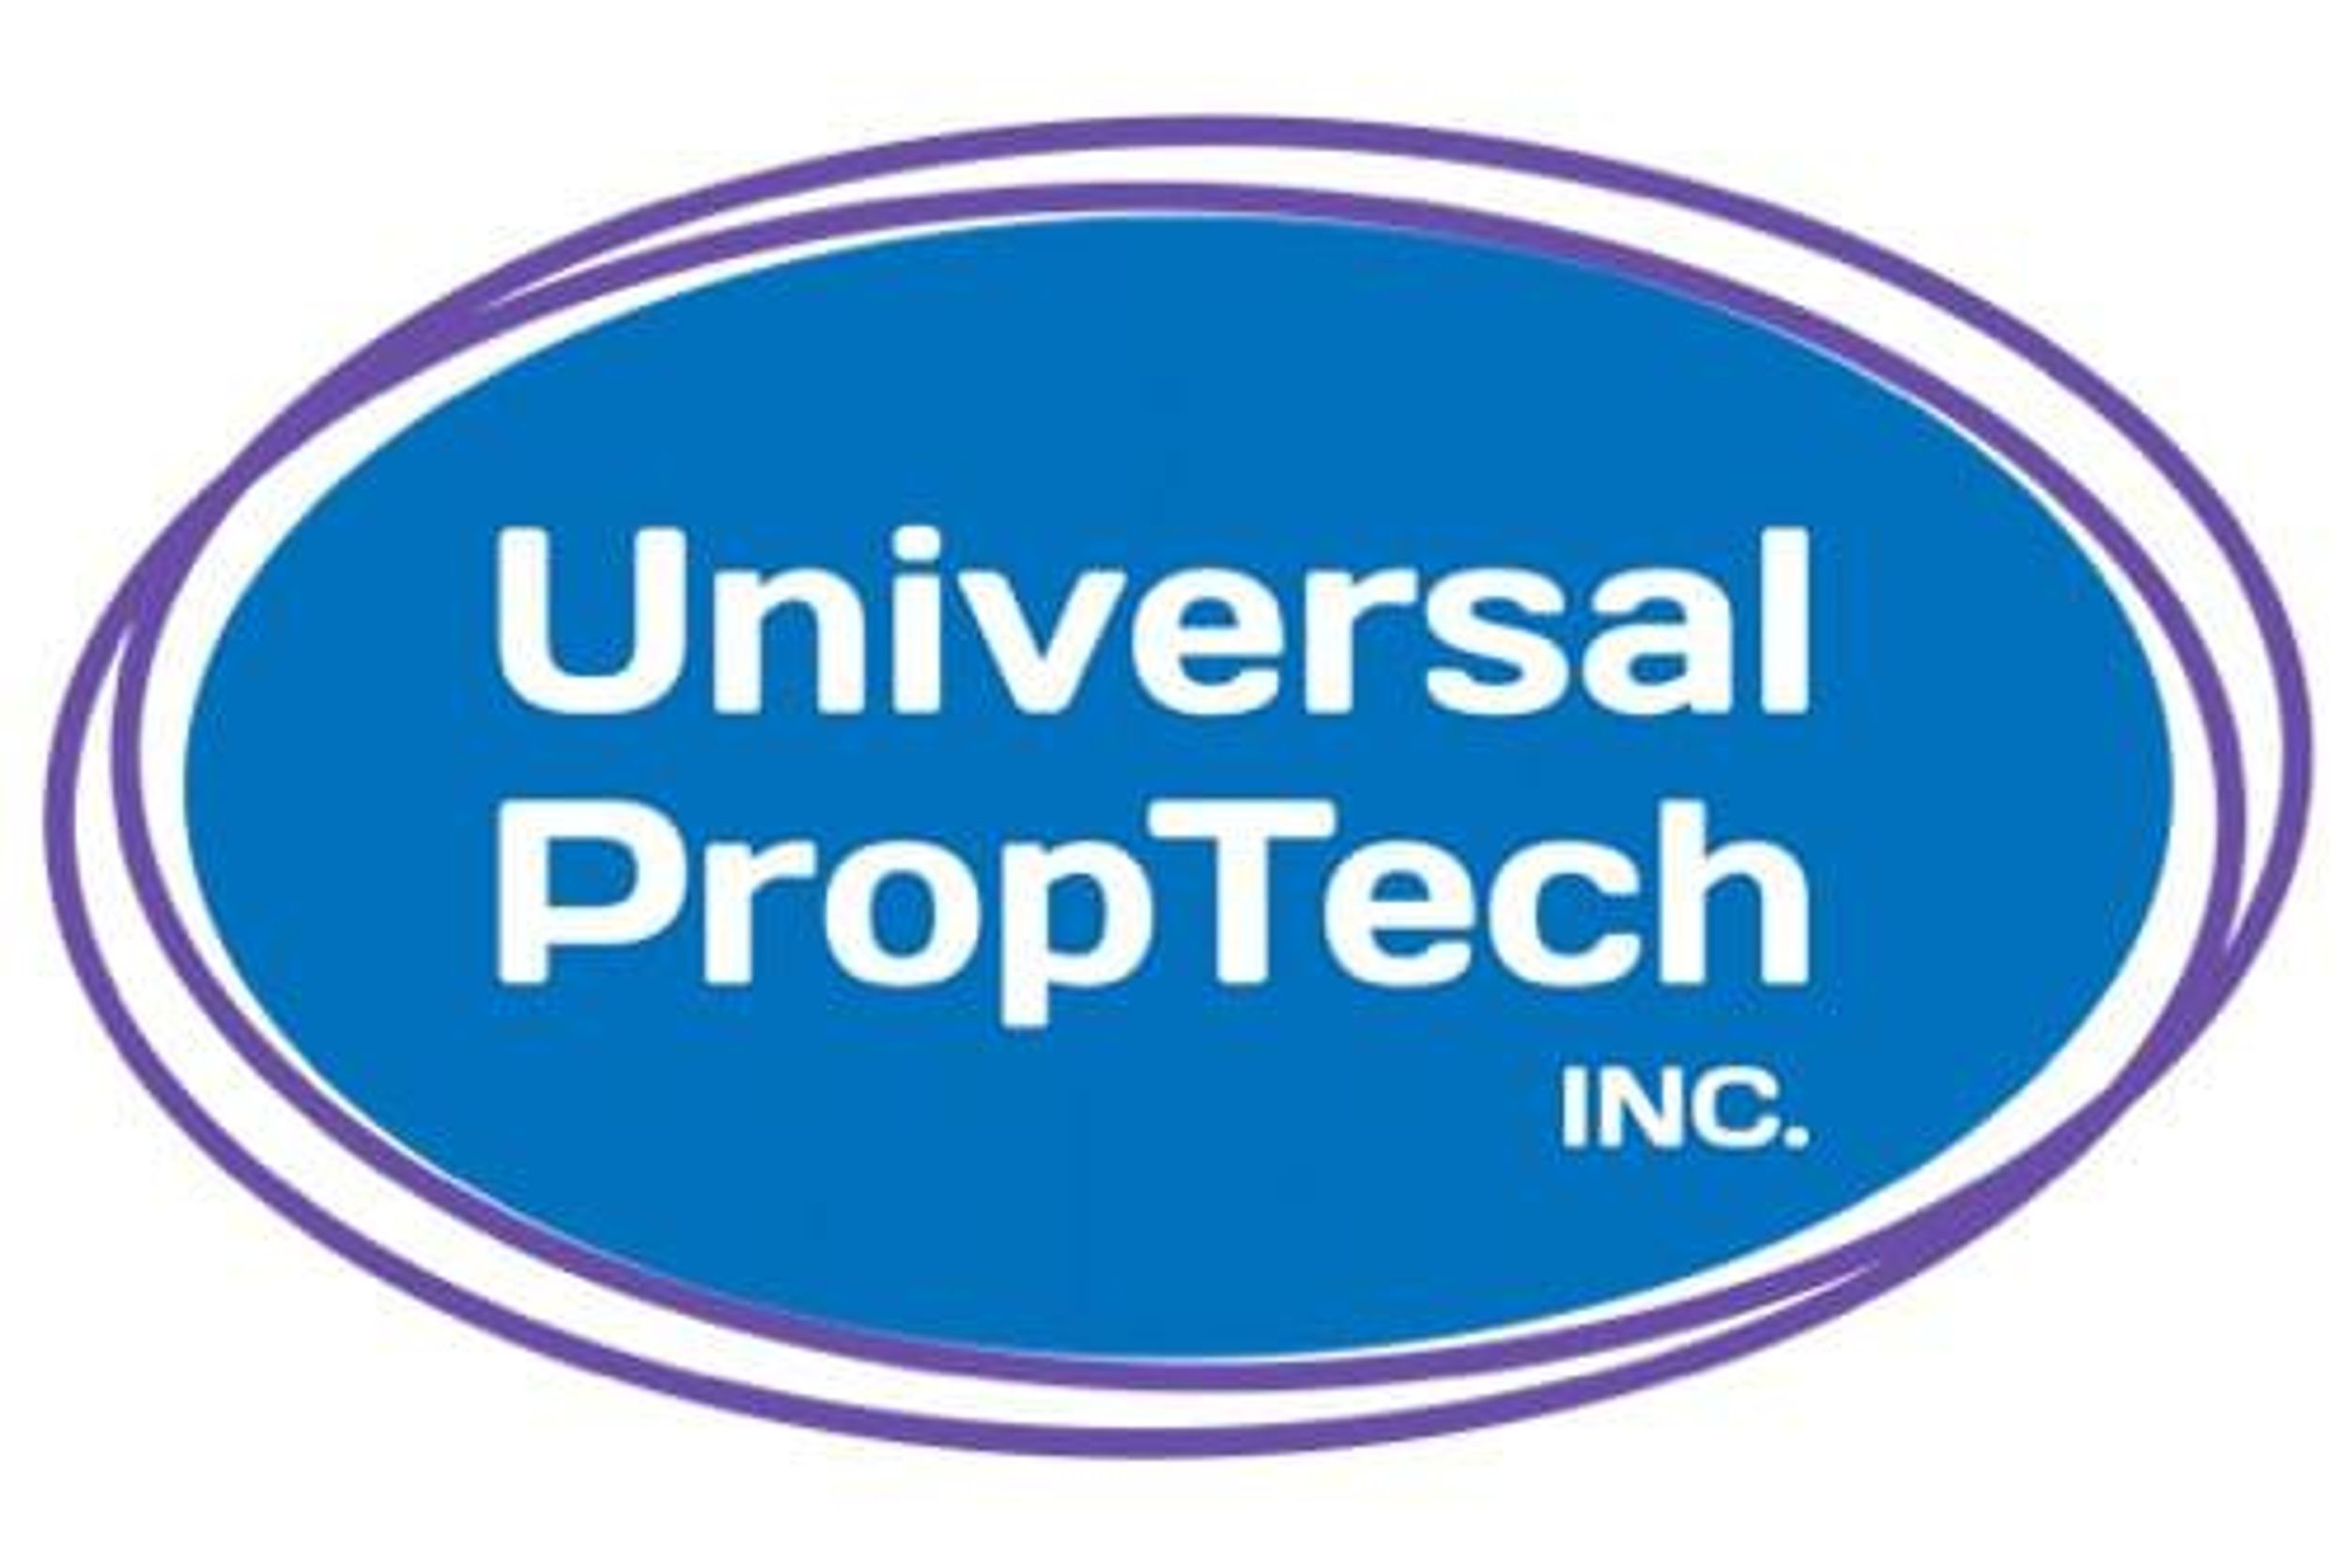 Universal PropTech Update